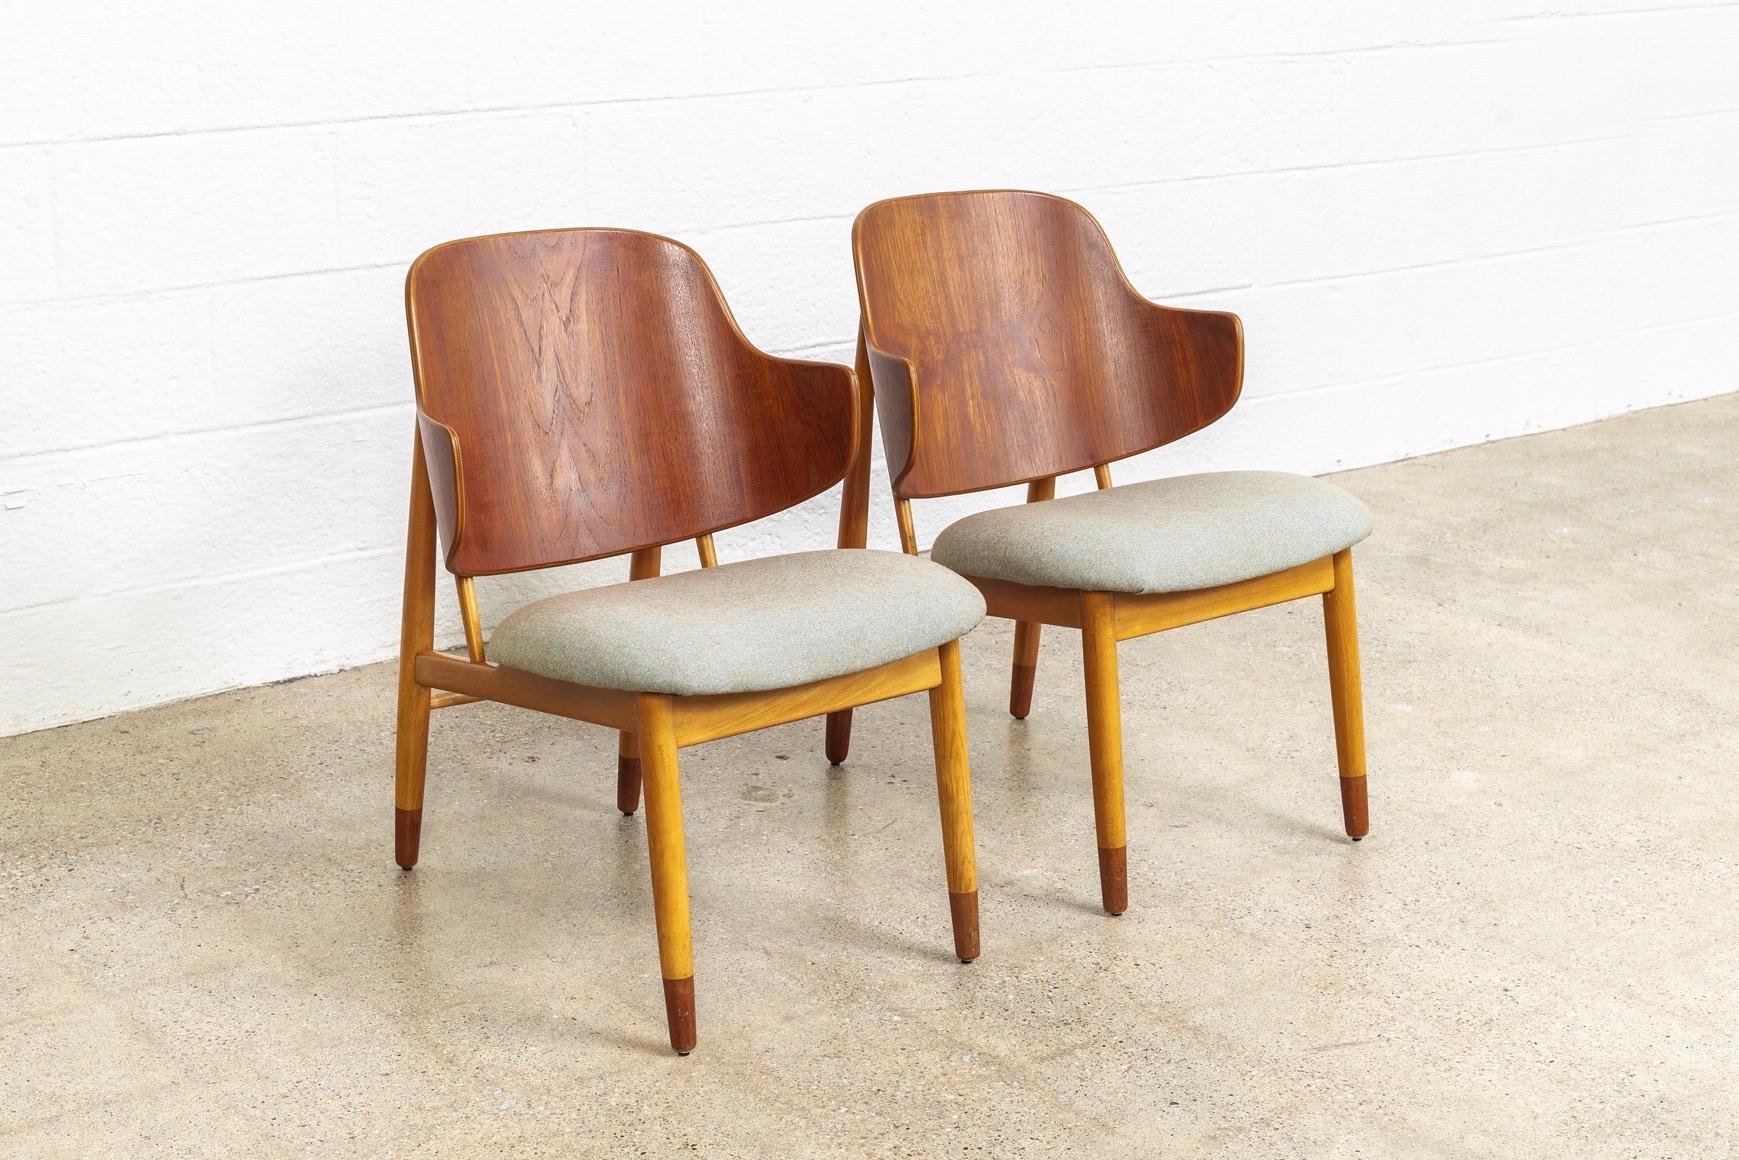 Molded Vintage Midcentury Danish Modern Kofod Larsen Two-Toned Penguin Chairs, 1960s